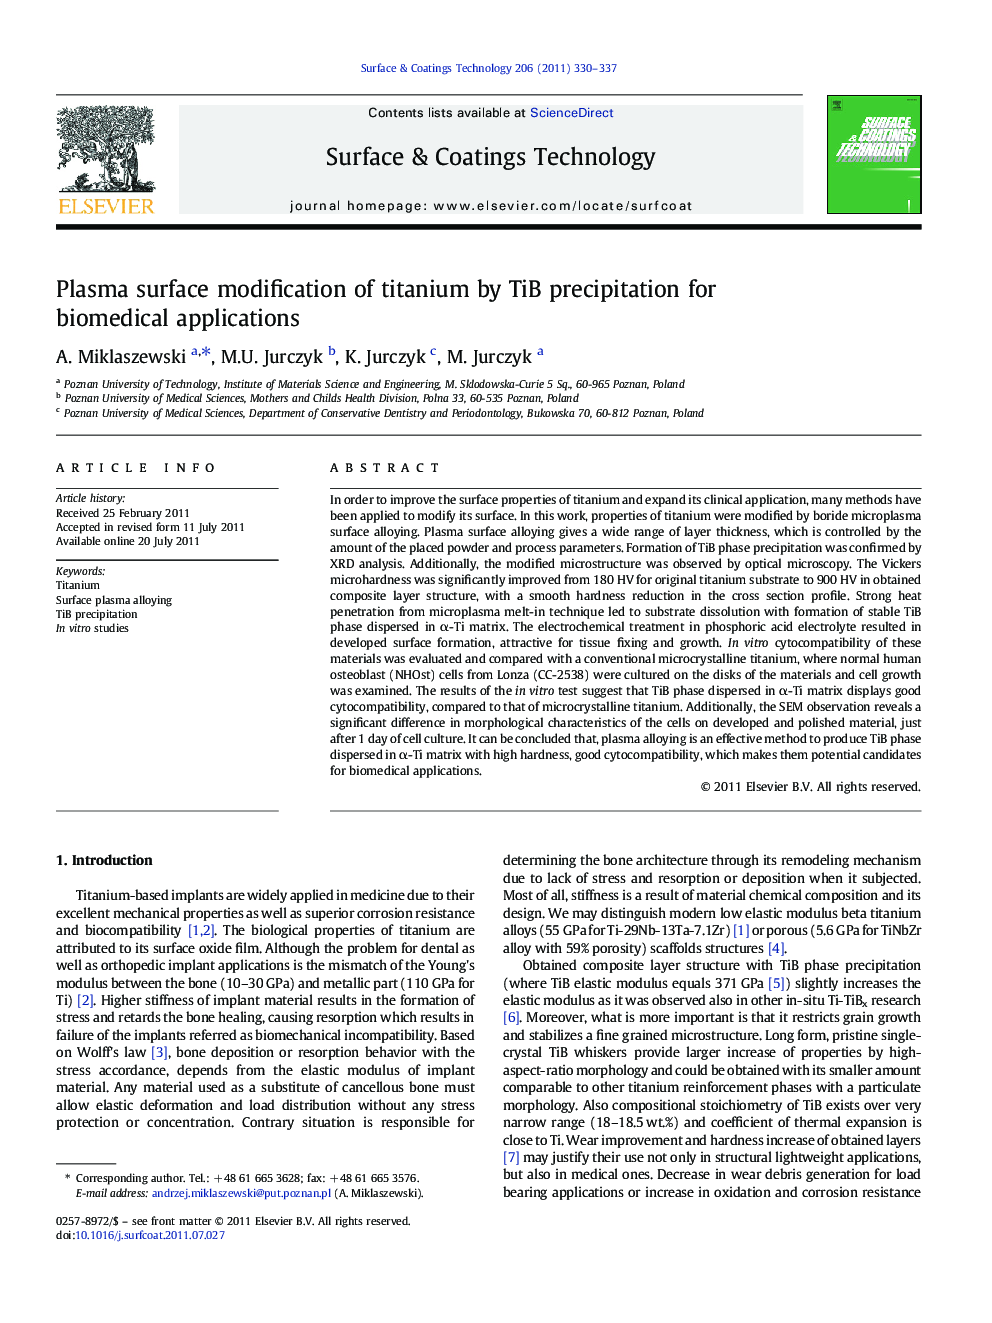 Plasma surface modification of titanium by TiB precipitation for biomedical applications